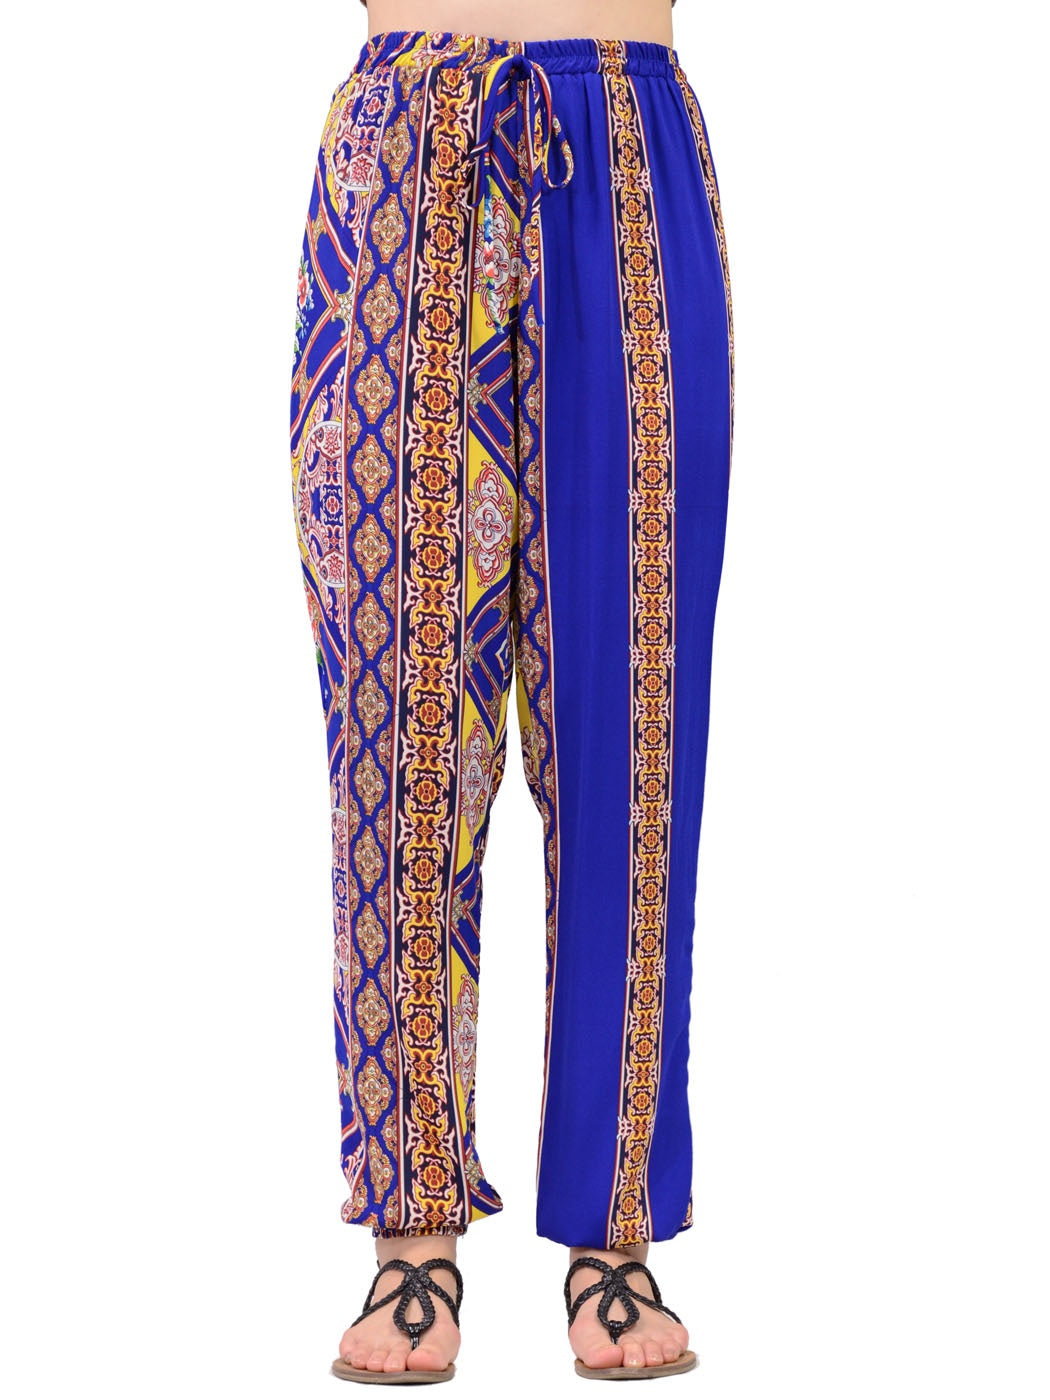 Anna-Kaci Royal Tapered Harem Genie Arabian Inspired Printed Fashion Pants - ALILANG.COM